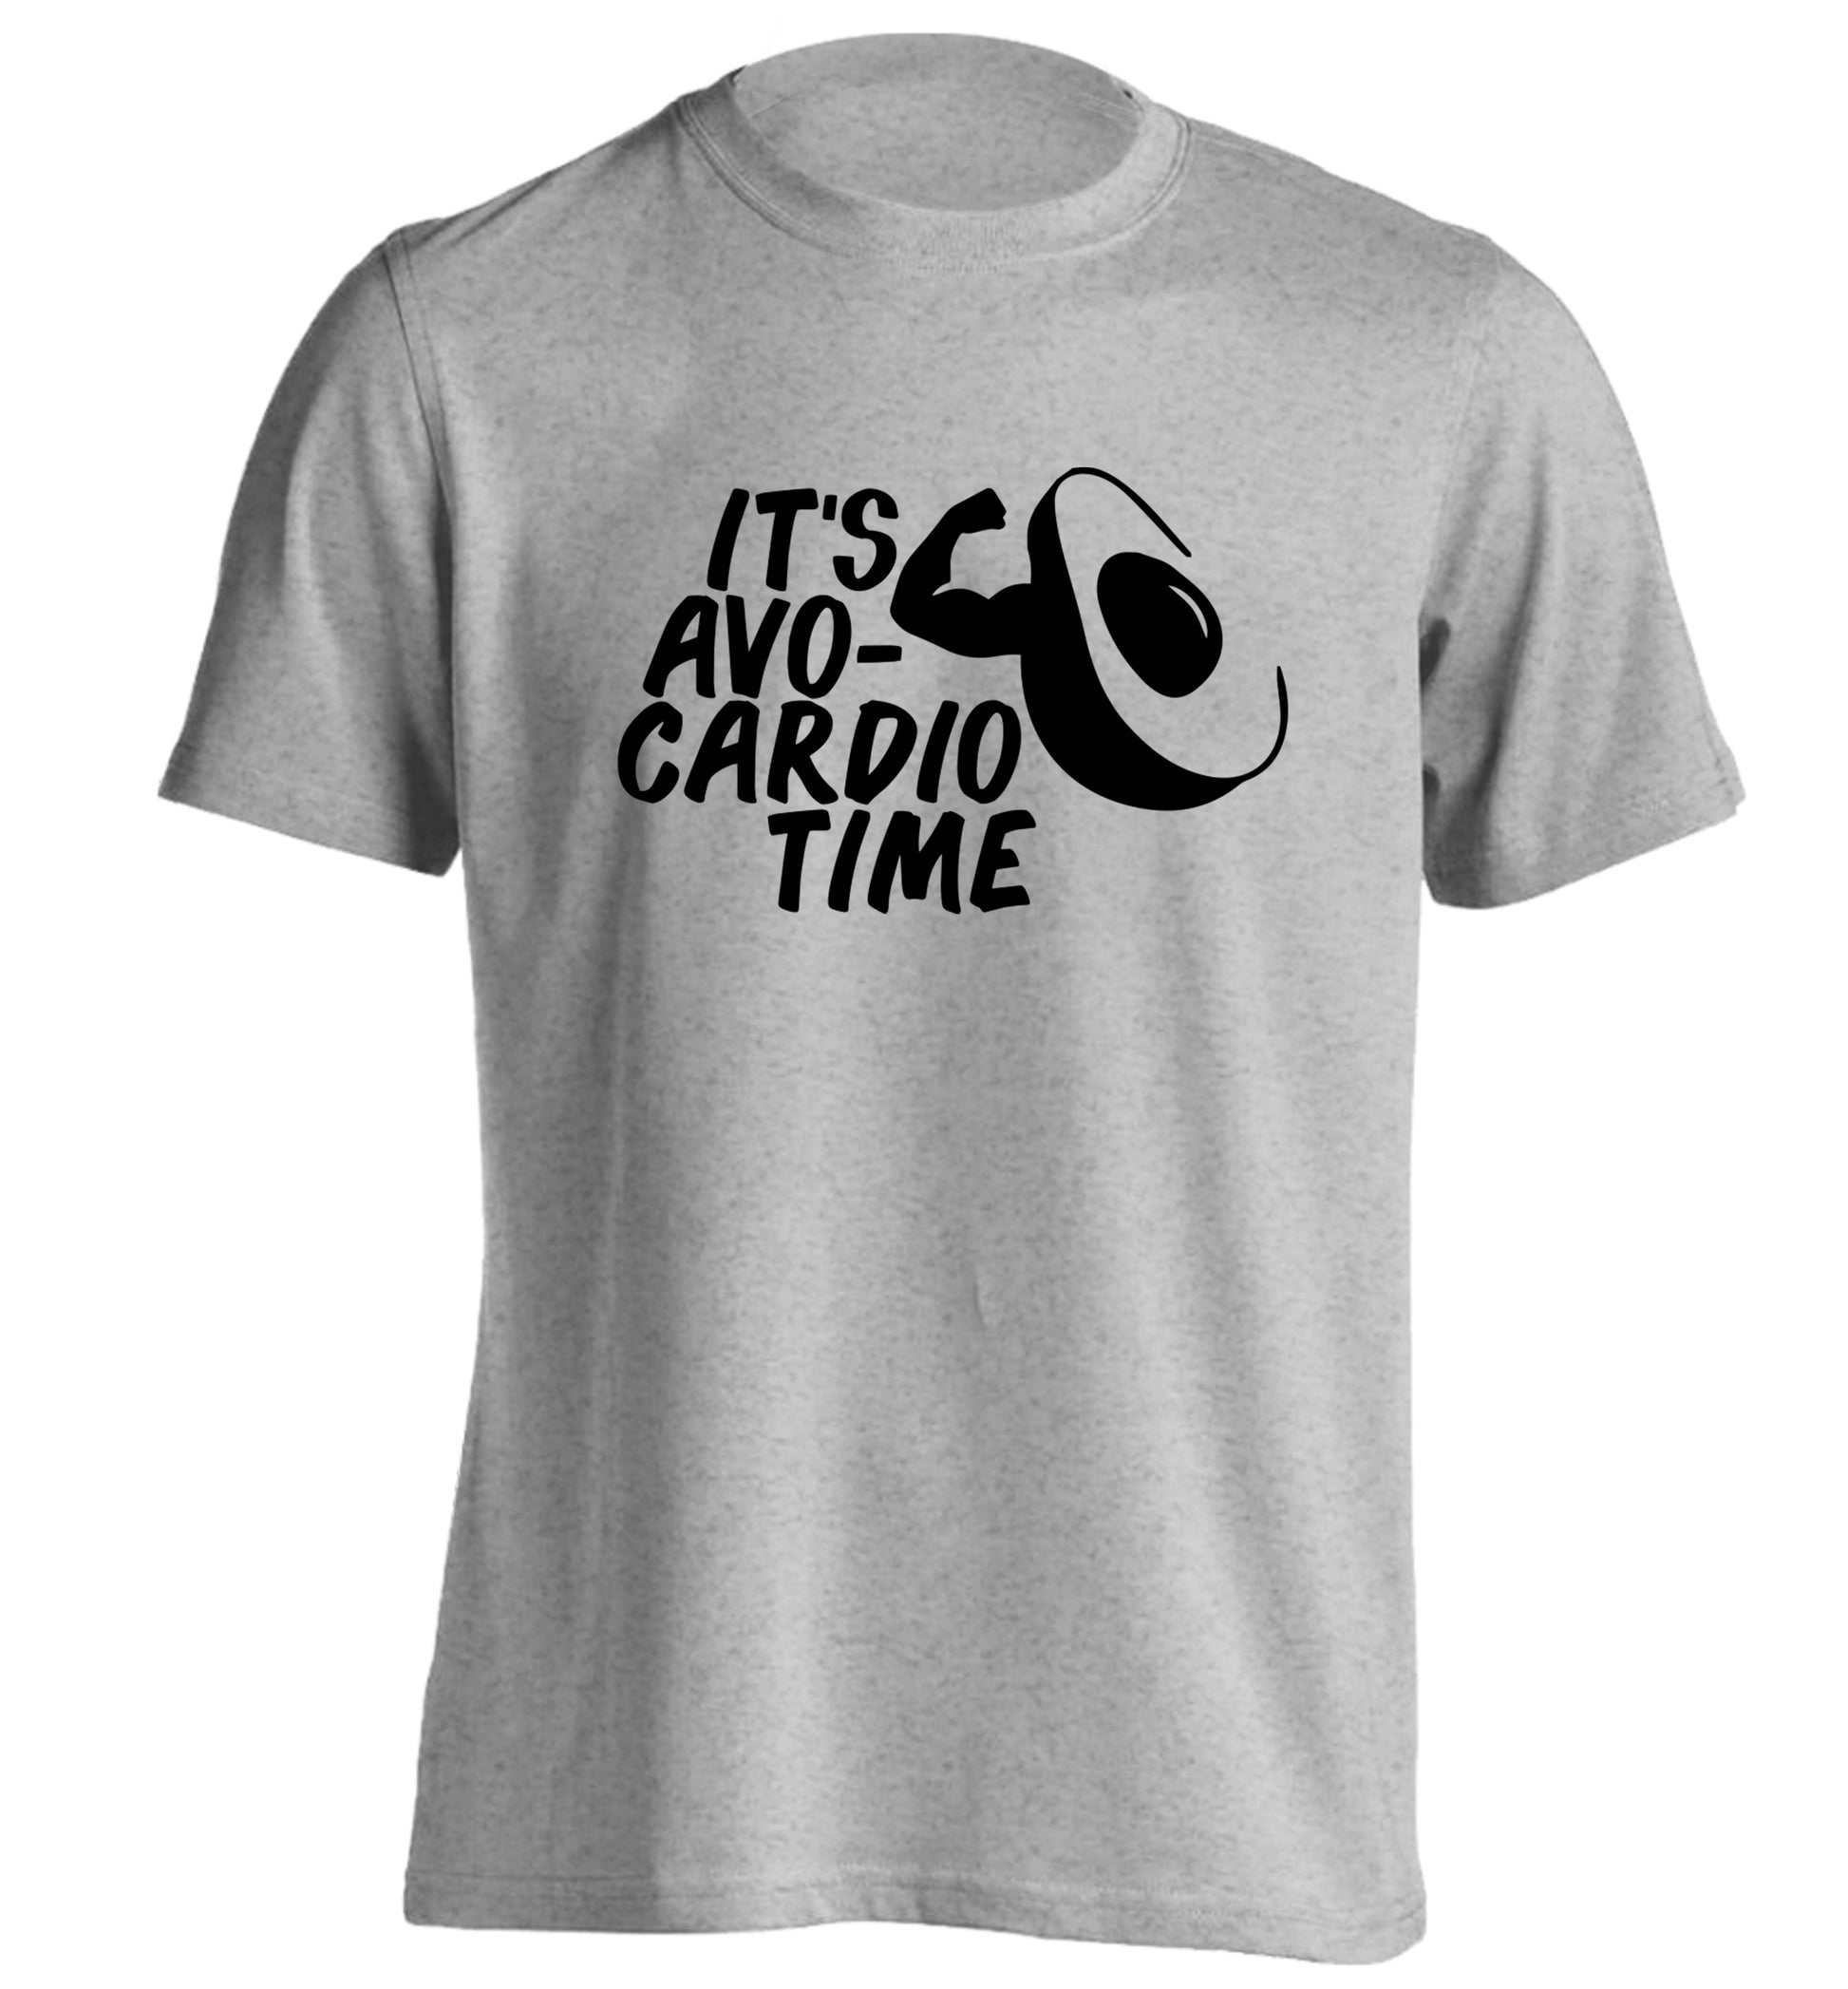 It's avo-cardio time adults unisex grey Tshirt 2XL